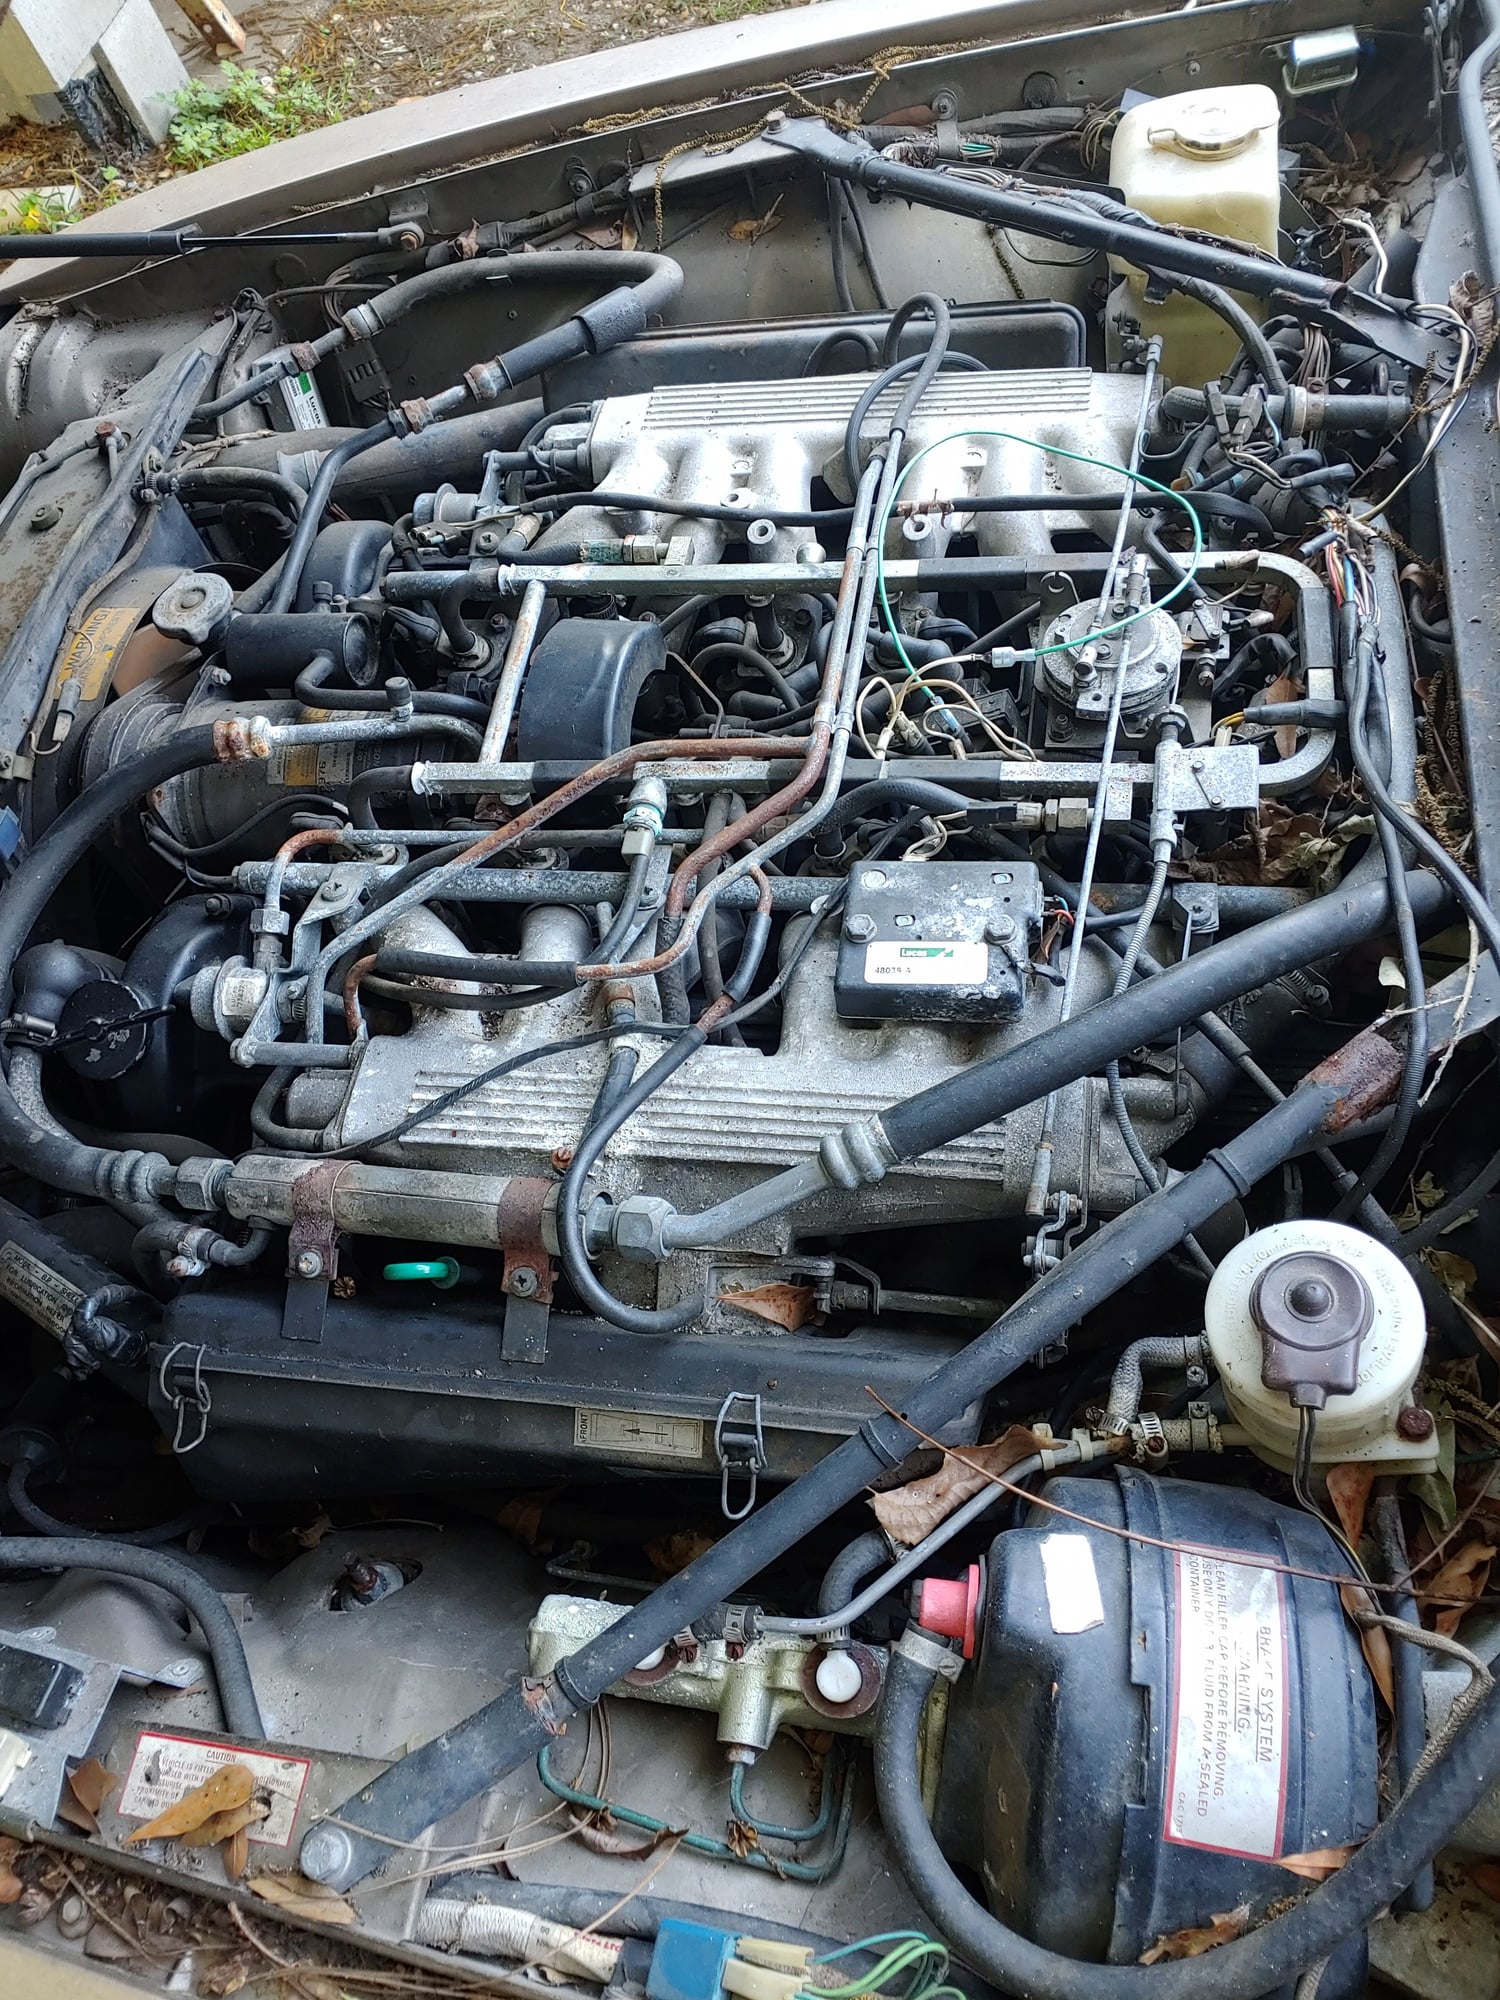 1988 Jaguar XJS - 88 xjs v12 for parts - Used - VIN Sajnv5845jc139585 - 80,000 Miles - 12 cyl - Automatic - Gold - Stapleton, AL 36578, United States